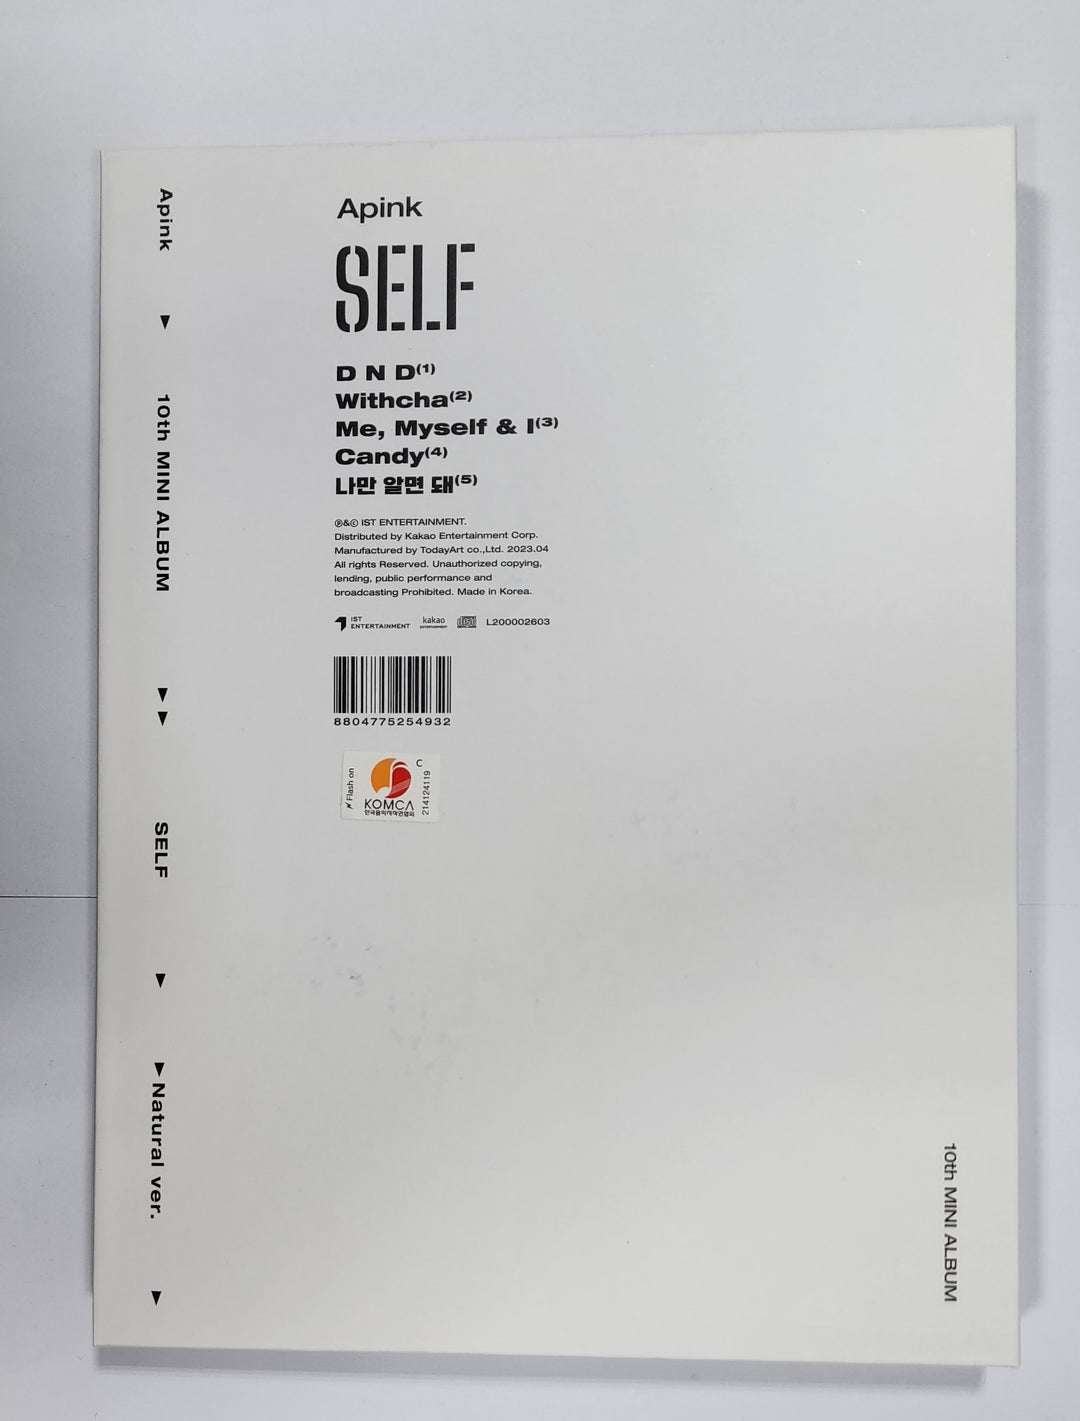 Apink "SELF" 10th Mini Album - Hand Autographed(Signed) Album